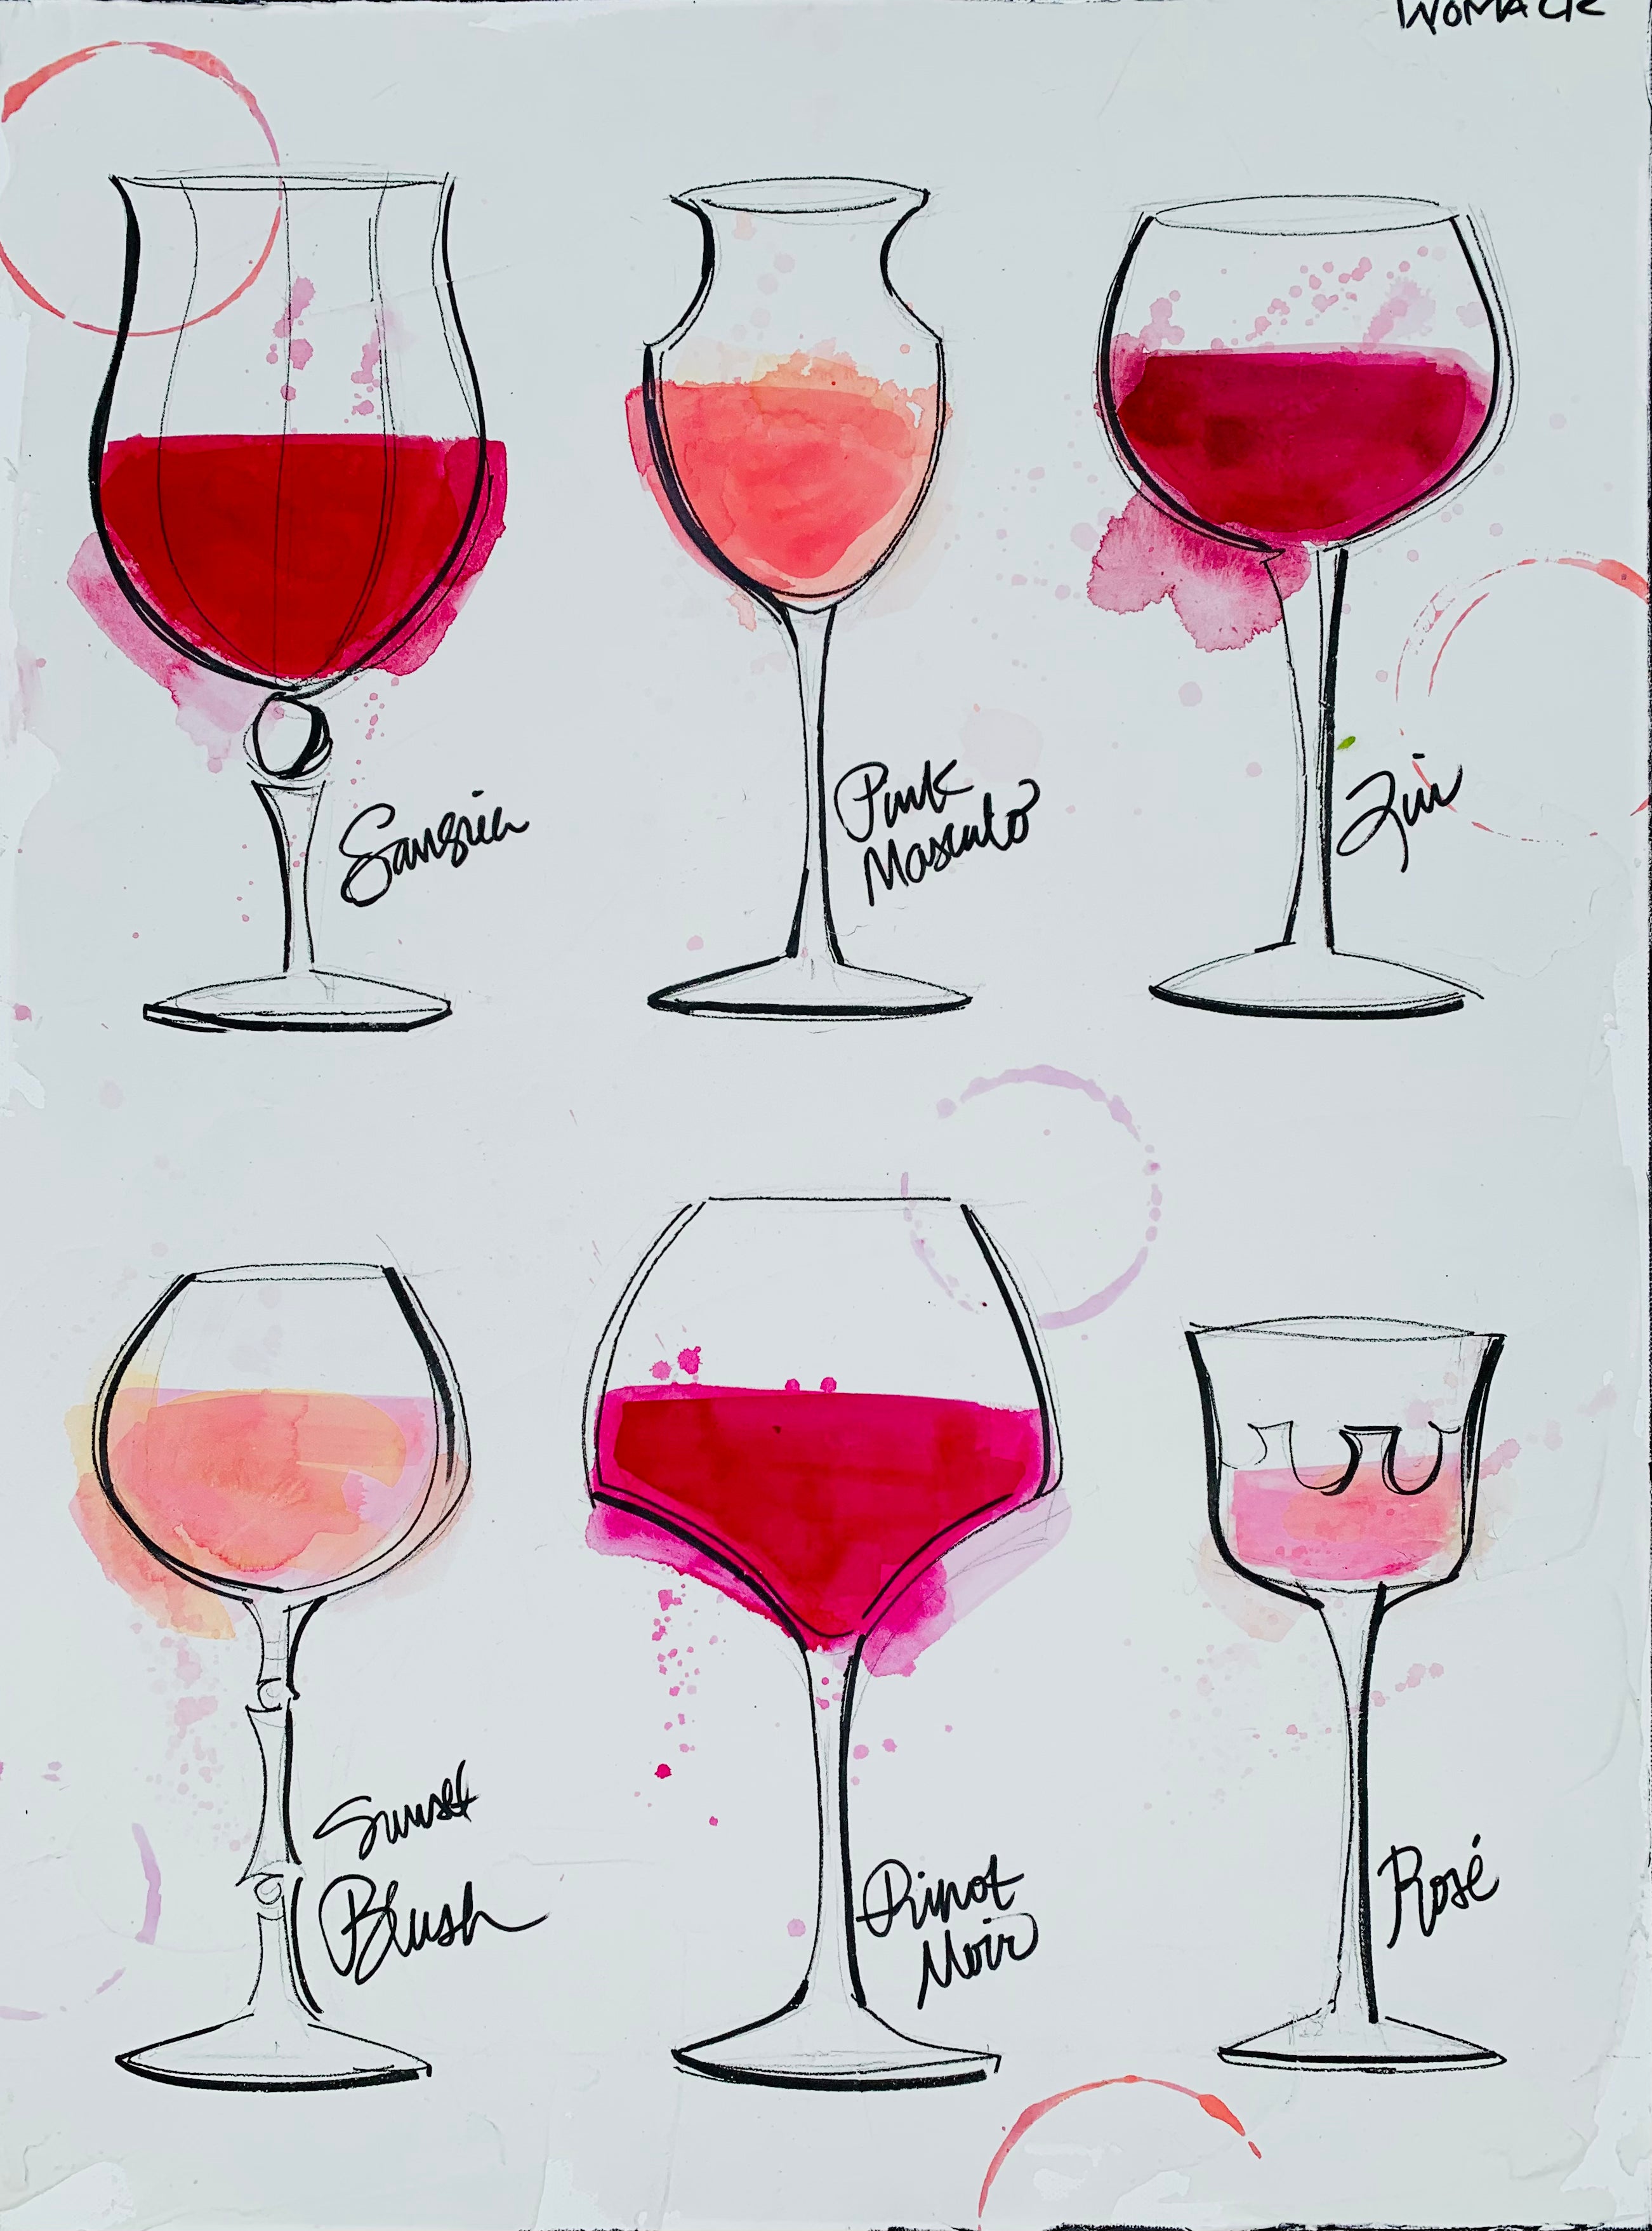 Wine Glossary Illustration